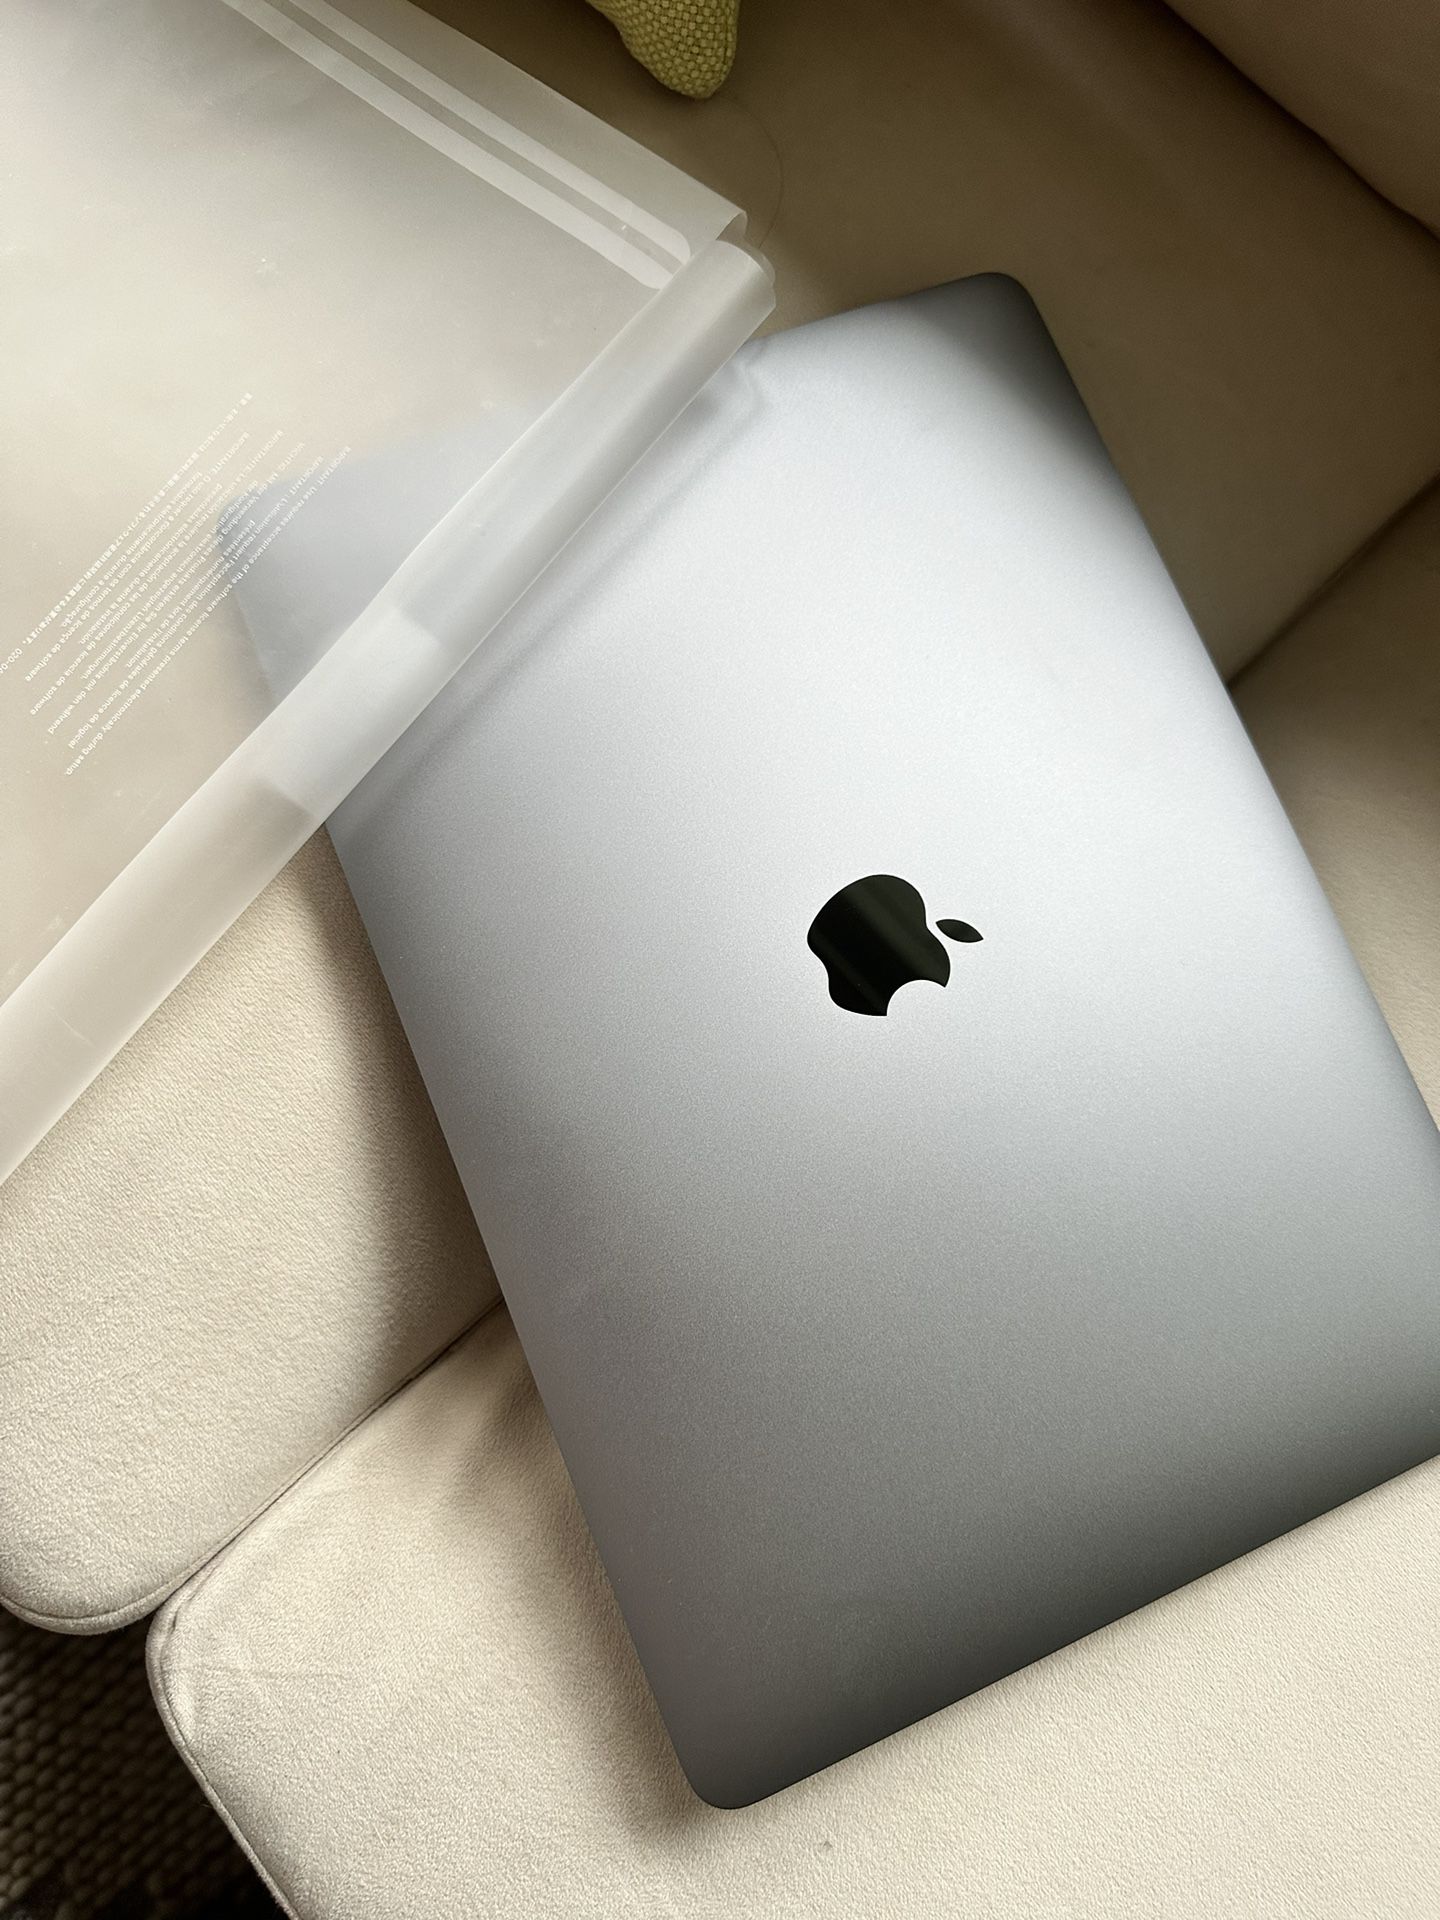 New MacBook Air 2020 M1 13-inch - $500